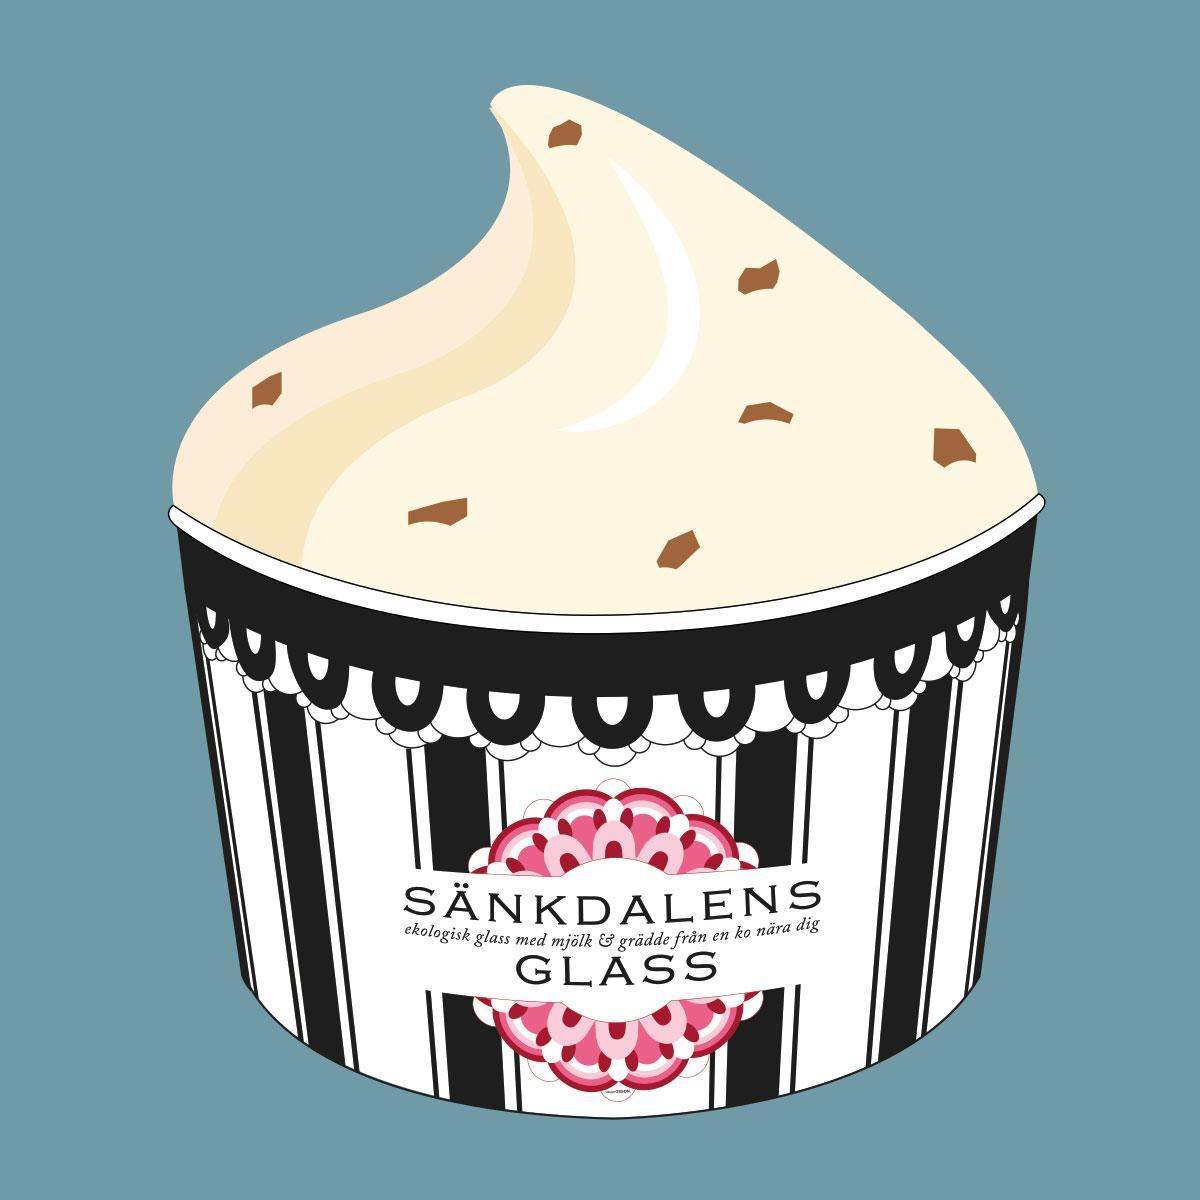 Crispy ice cream Sänkdalens glass